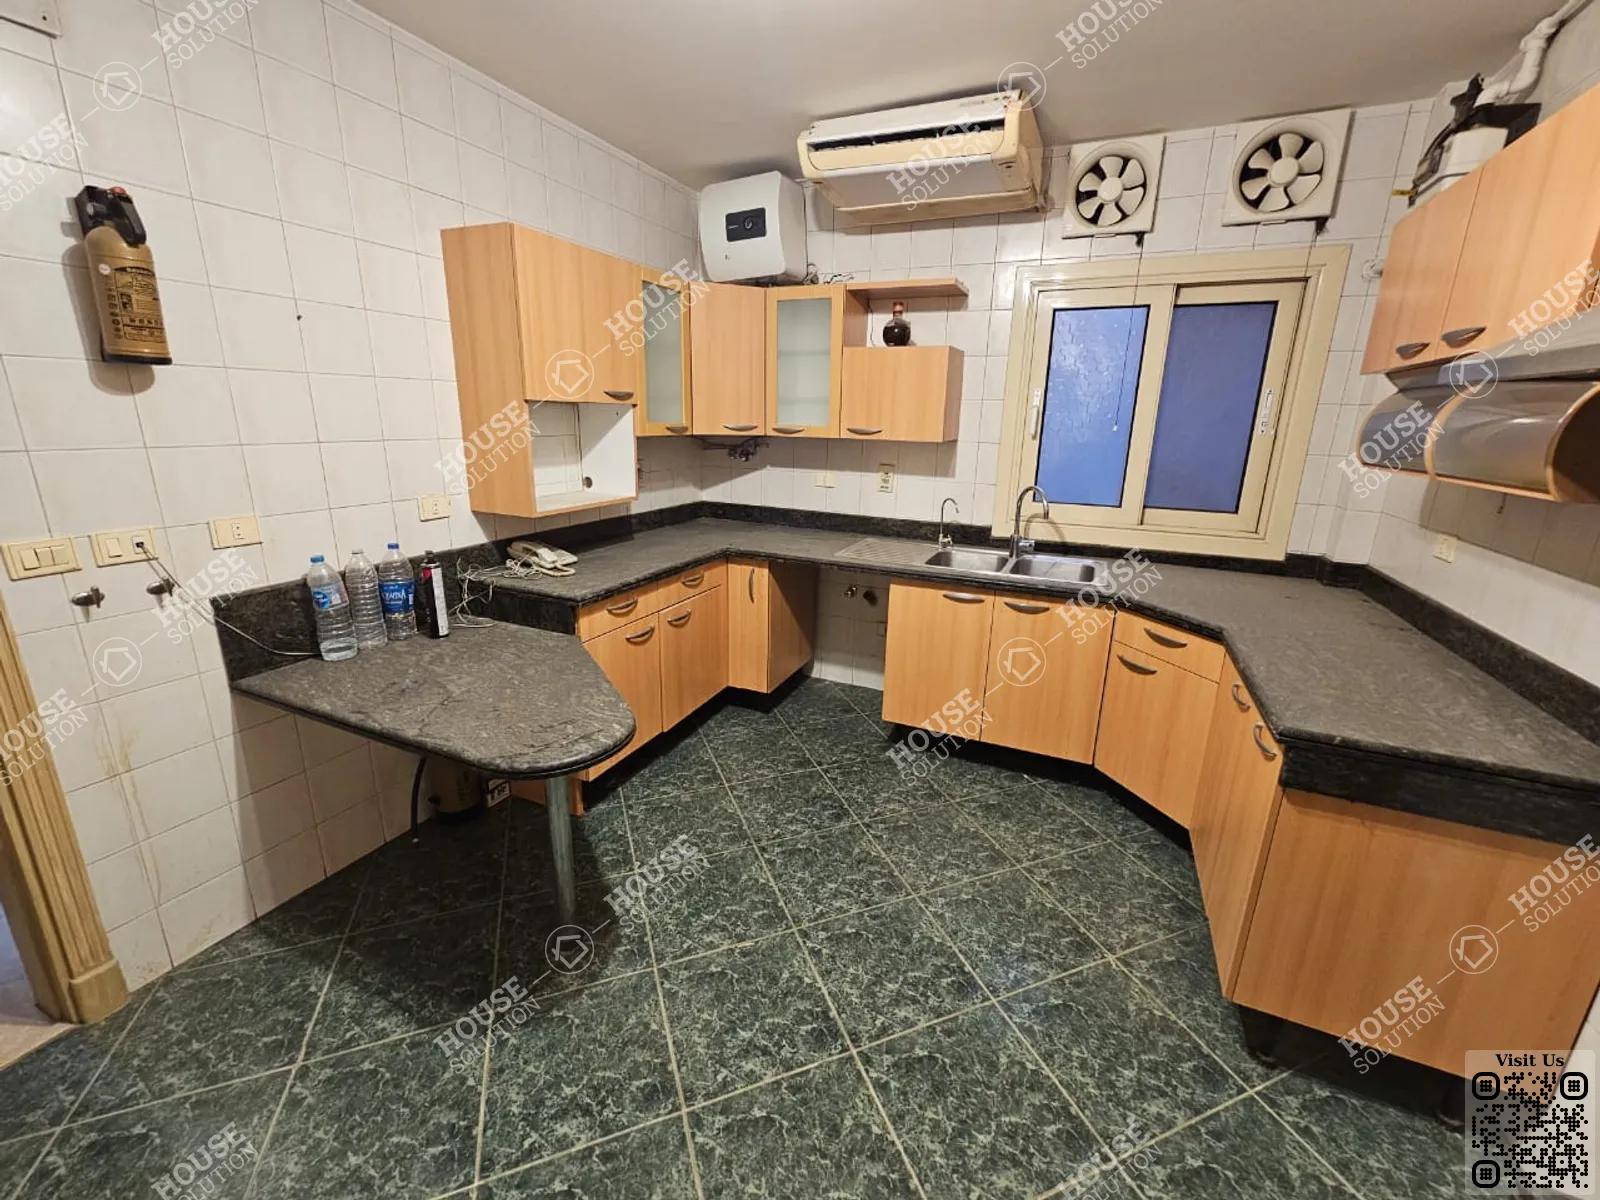 KITCHEN  @ Apartments For Rent In Maadi Maadi Sarayat Area: 280 m² consists of 4 Bedrooms 3 Bathrooms Semi furnished 5 stars #5807-1